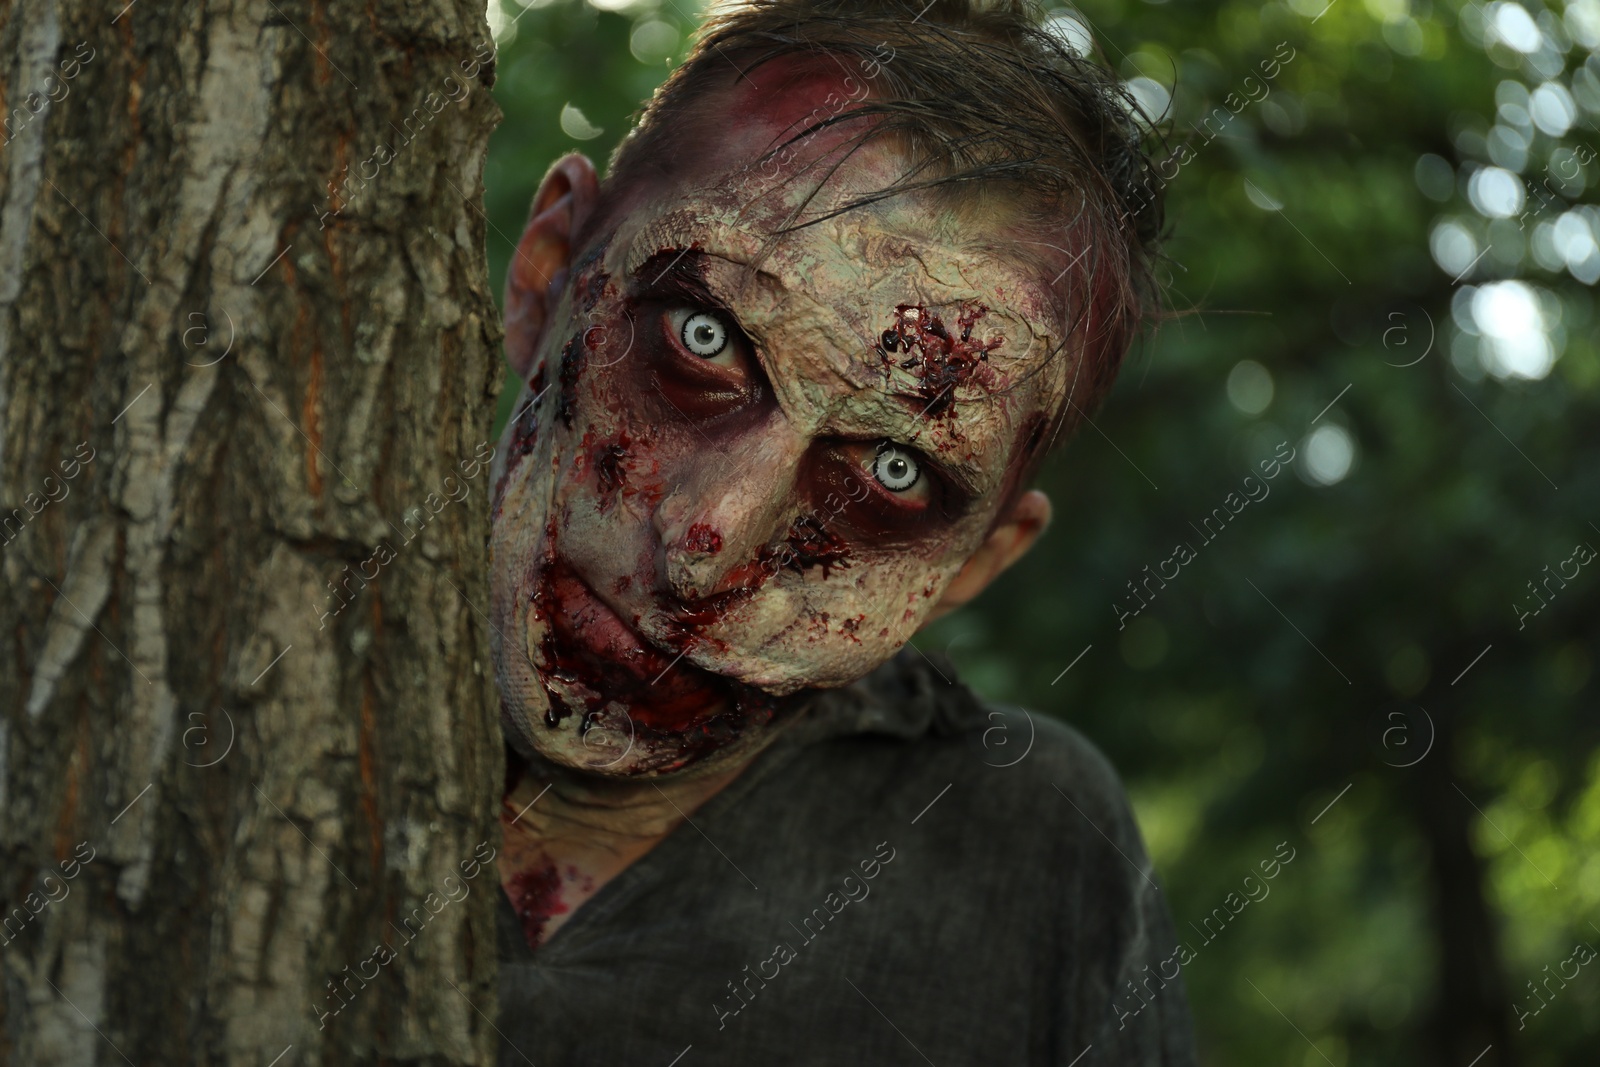 Photo of Scary zombie near tree outdoors. Halloween monster